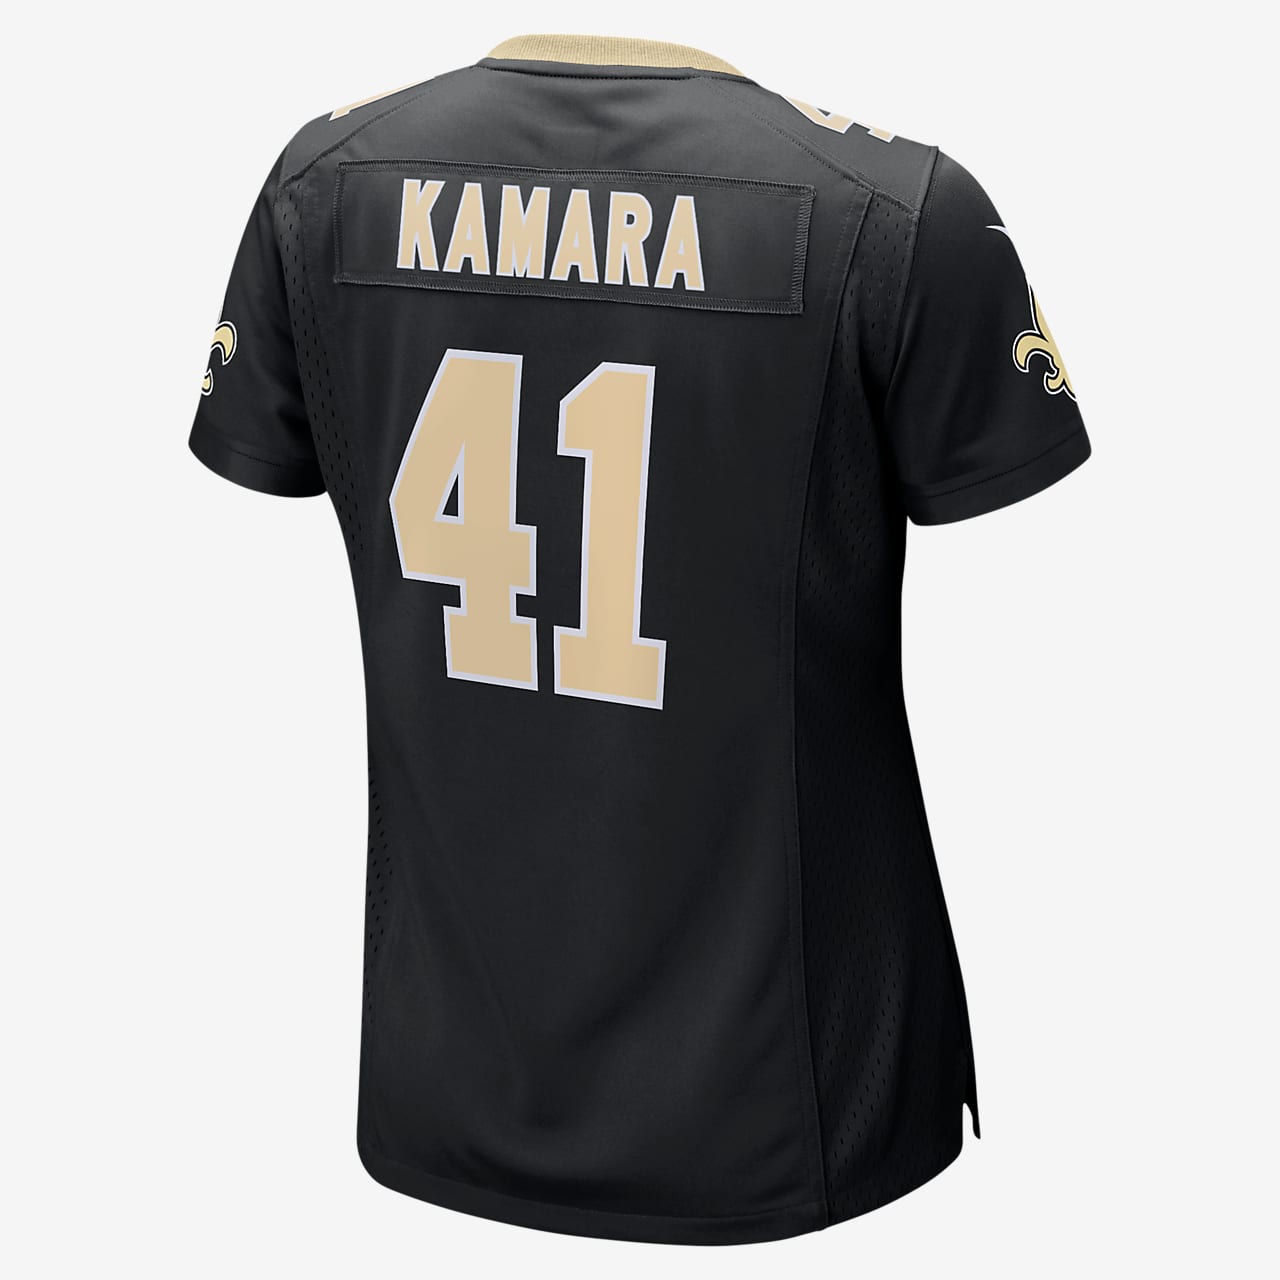 NFL New Orleans Saints (Alvin Kamara) Women's Game Football Jersey